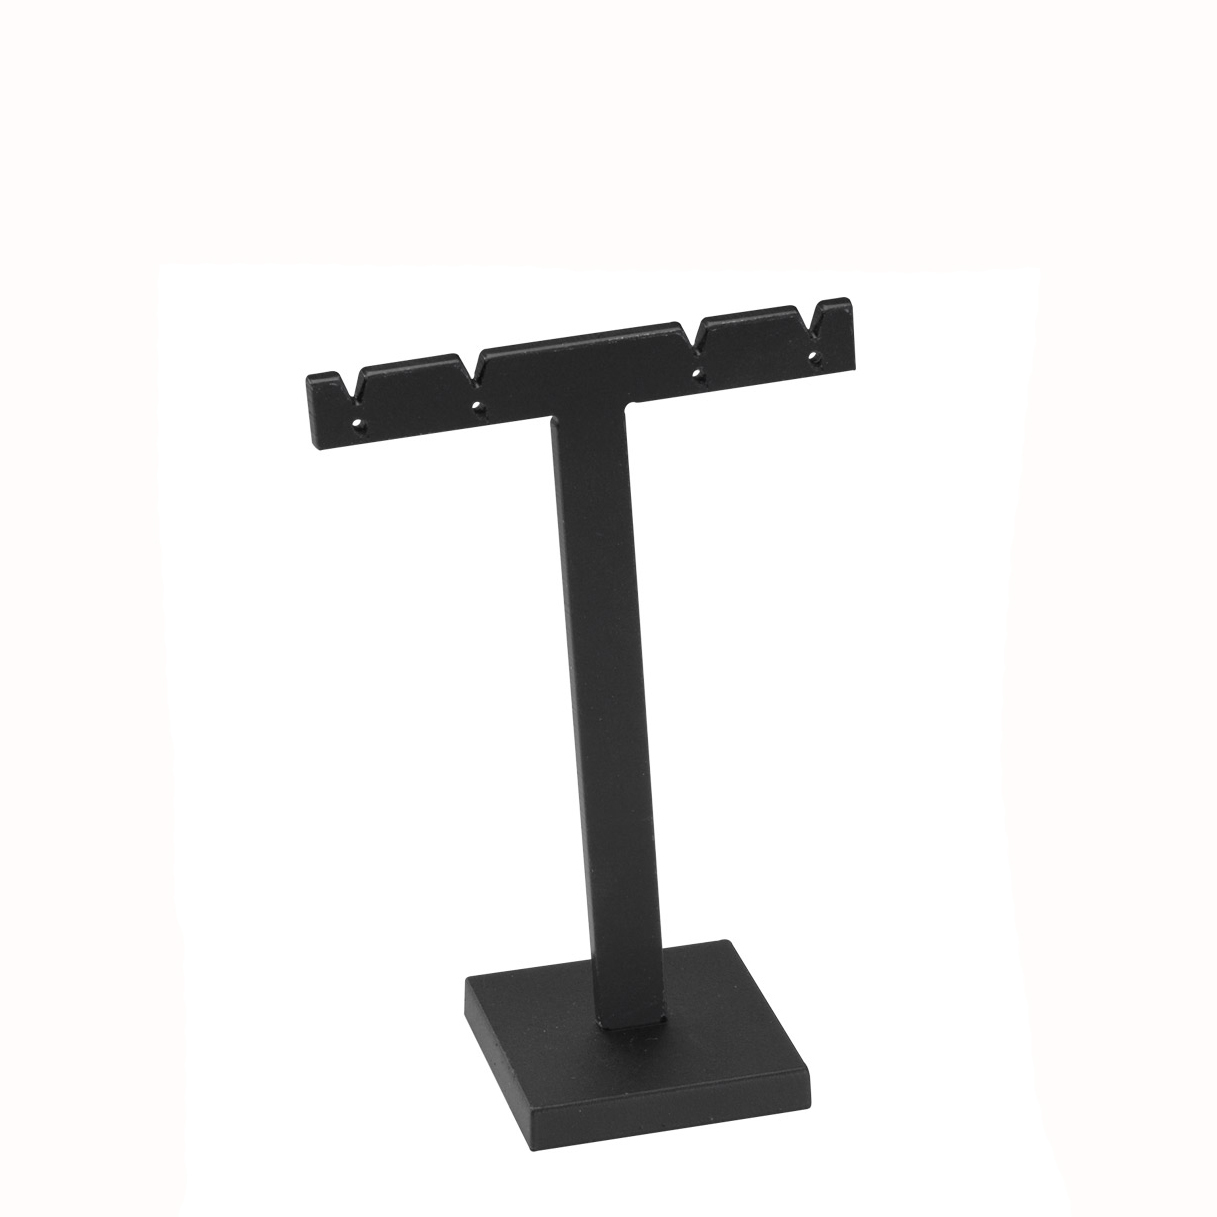 Matt black PMMA T shaped display for 2 pairs of earrings - 7.5 x 10.5 cm